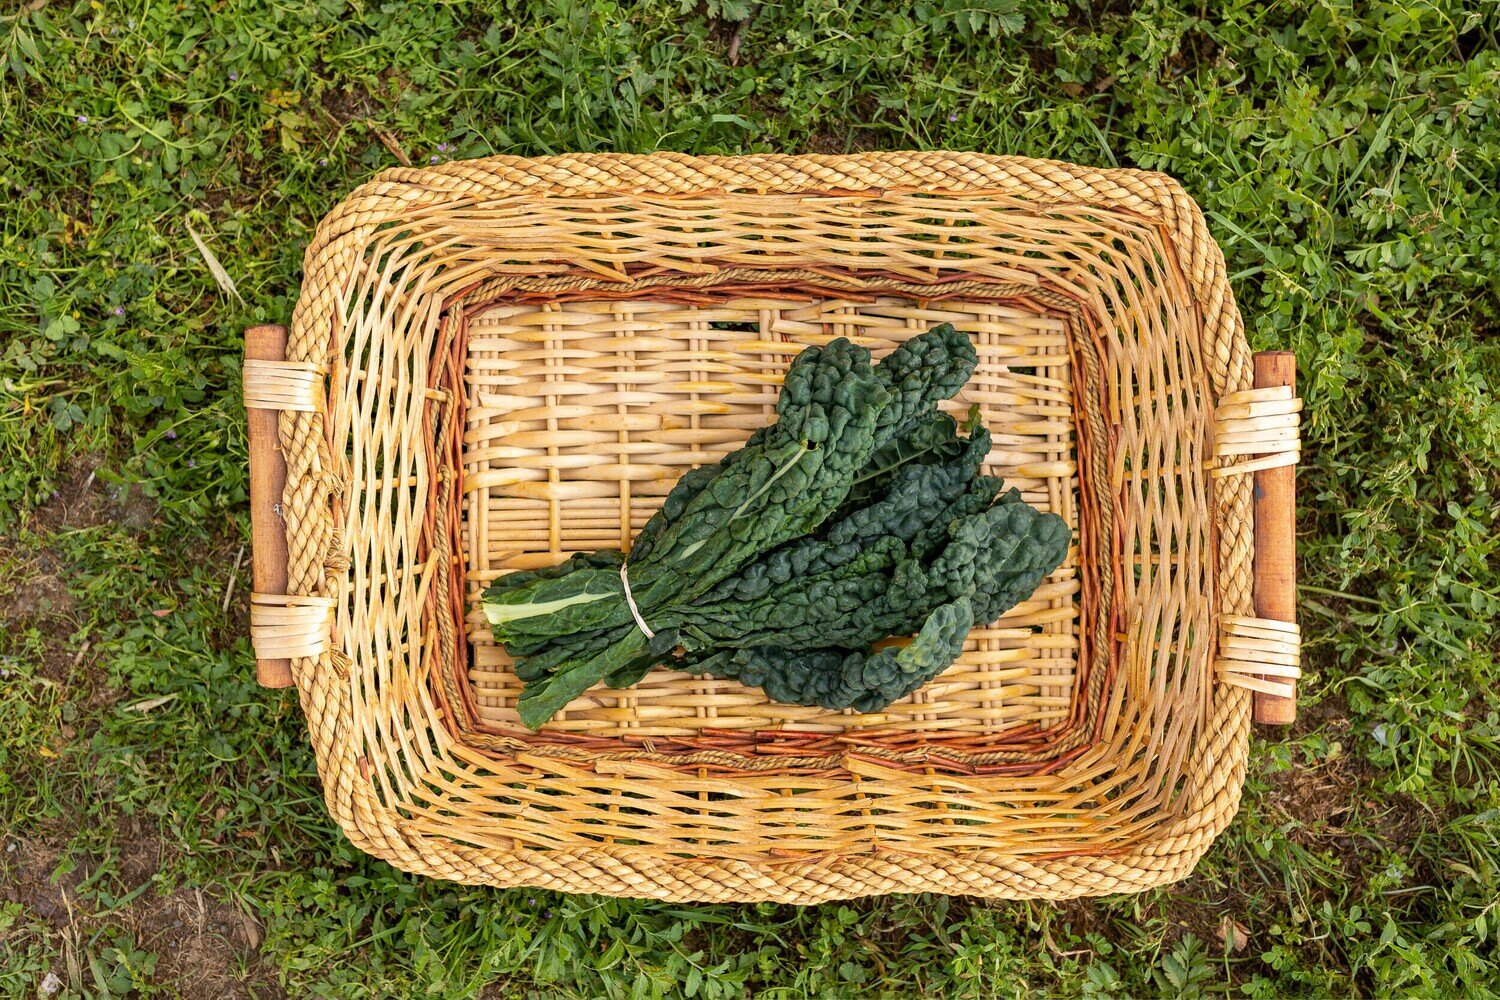 Greens Kale Tuscan/Lacinato Organic each